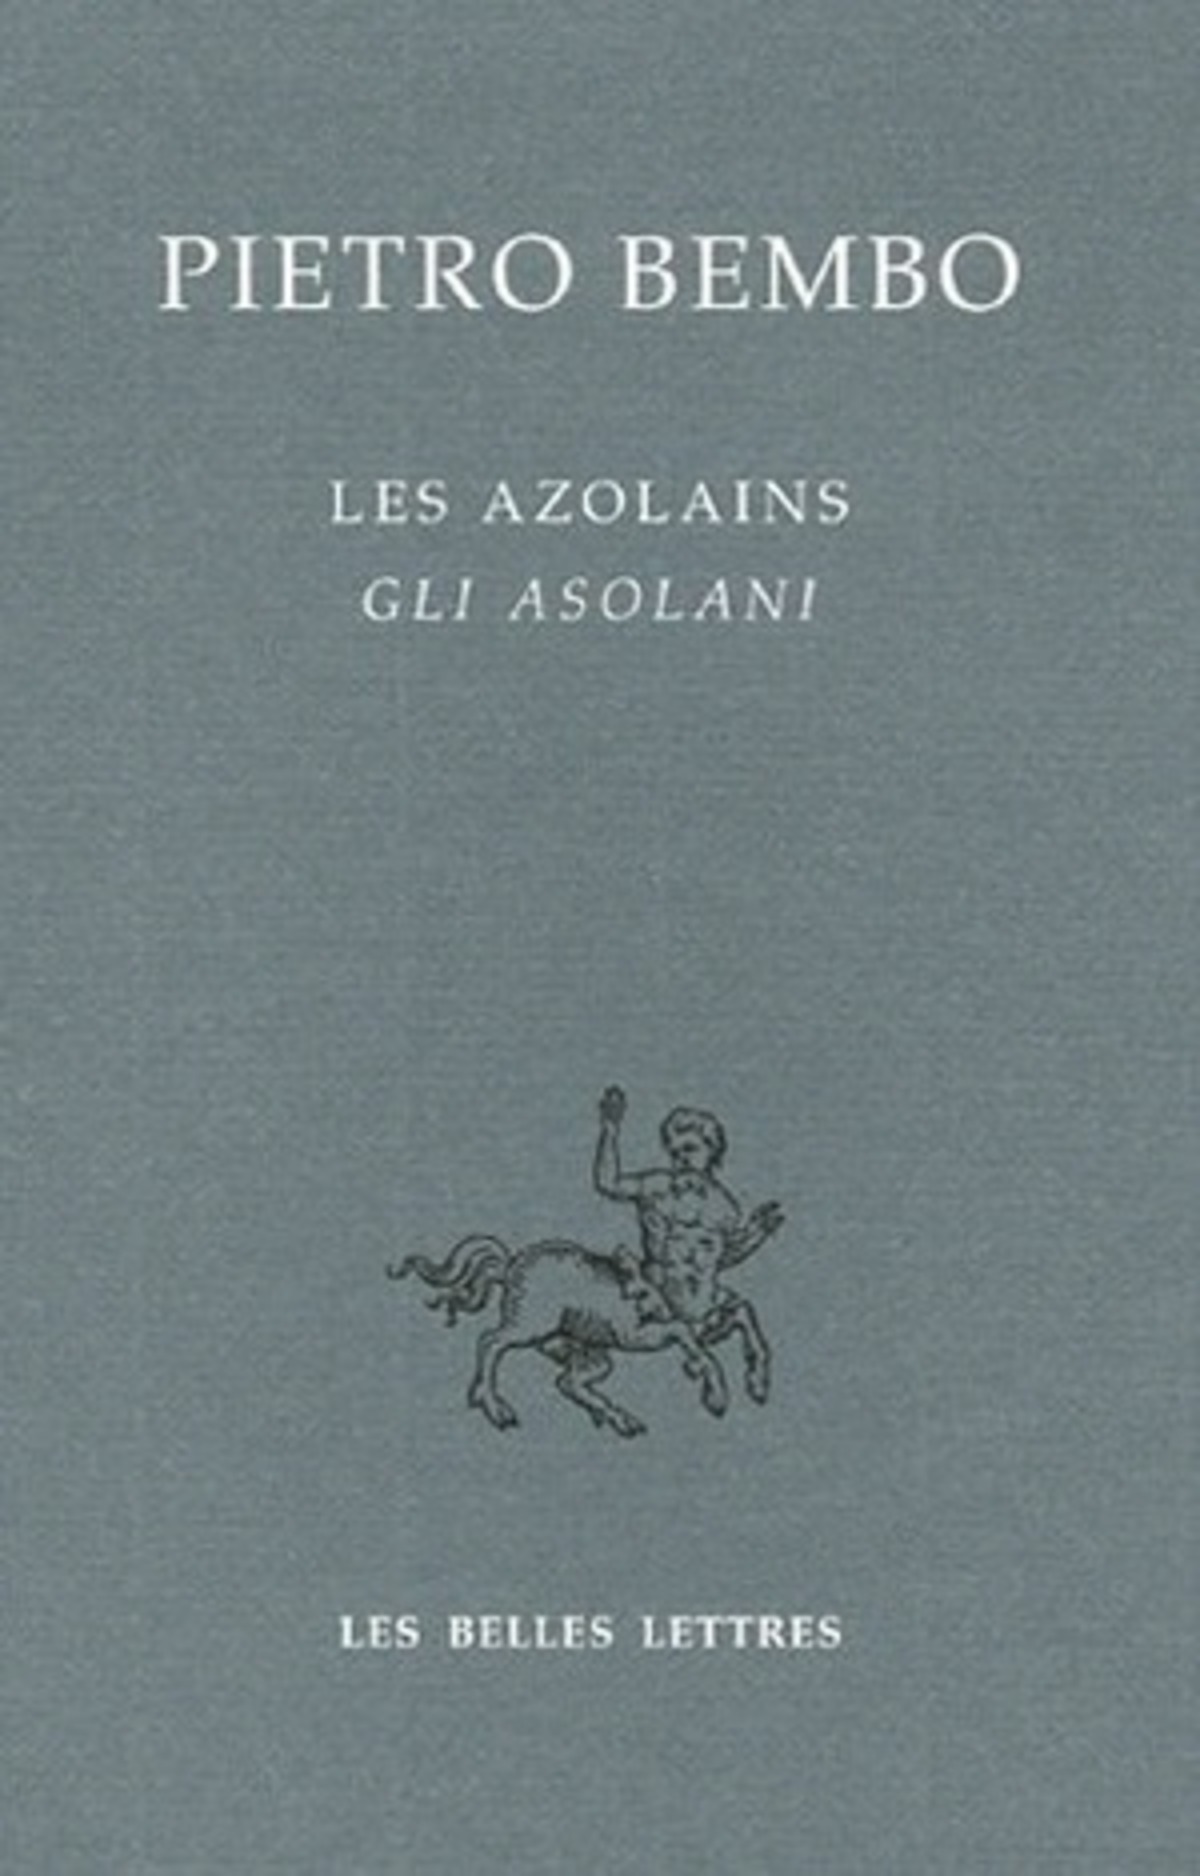 Les Azolains / Gli Azolani